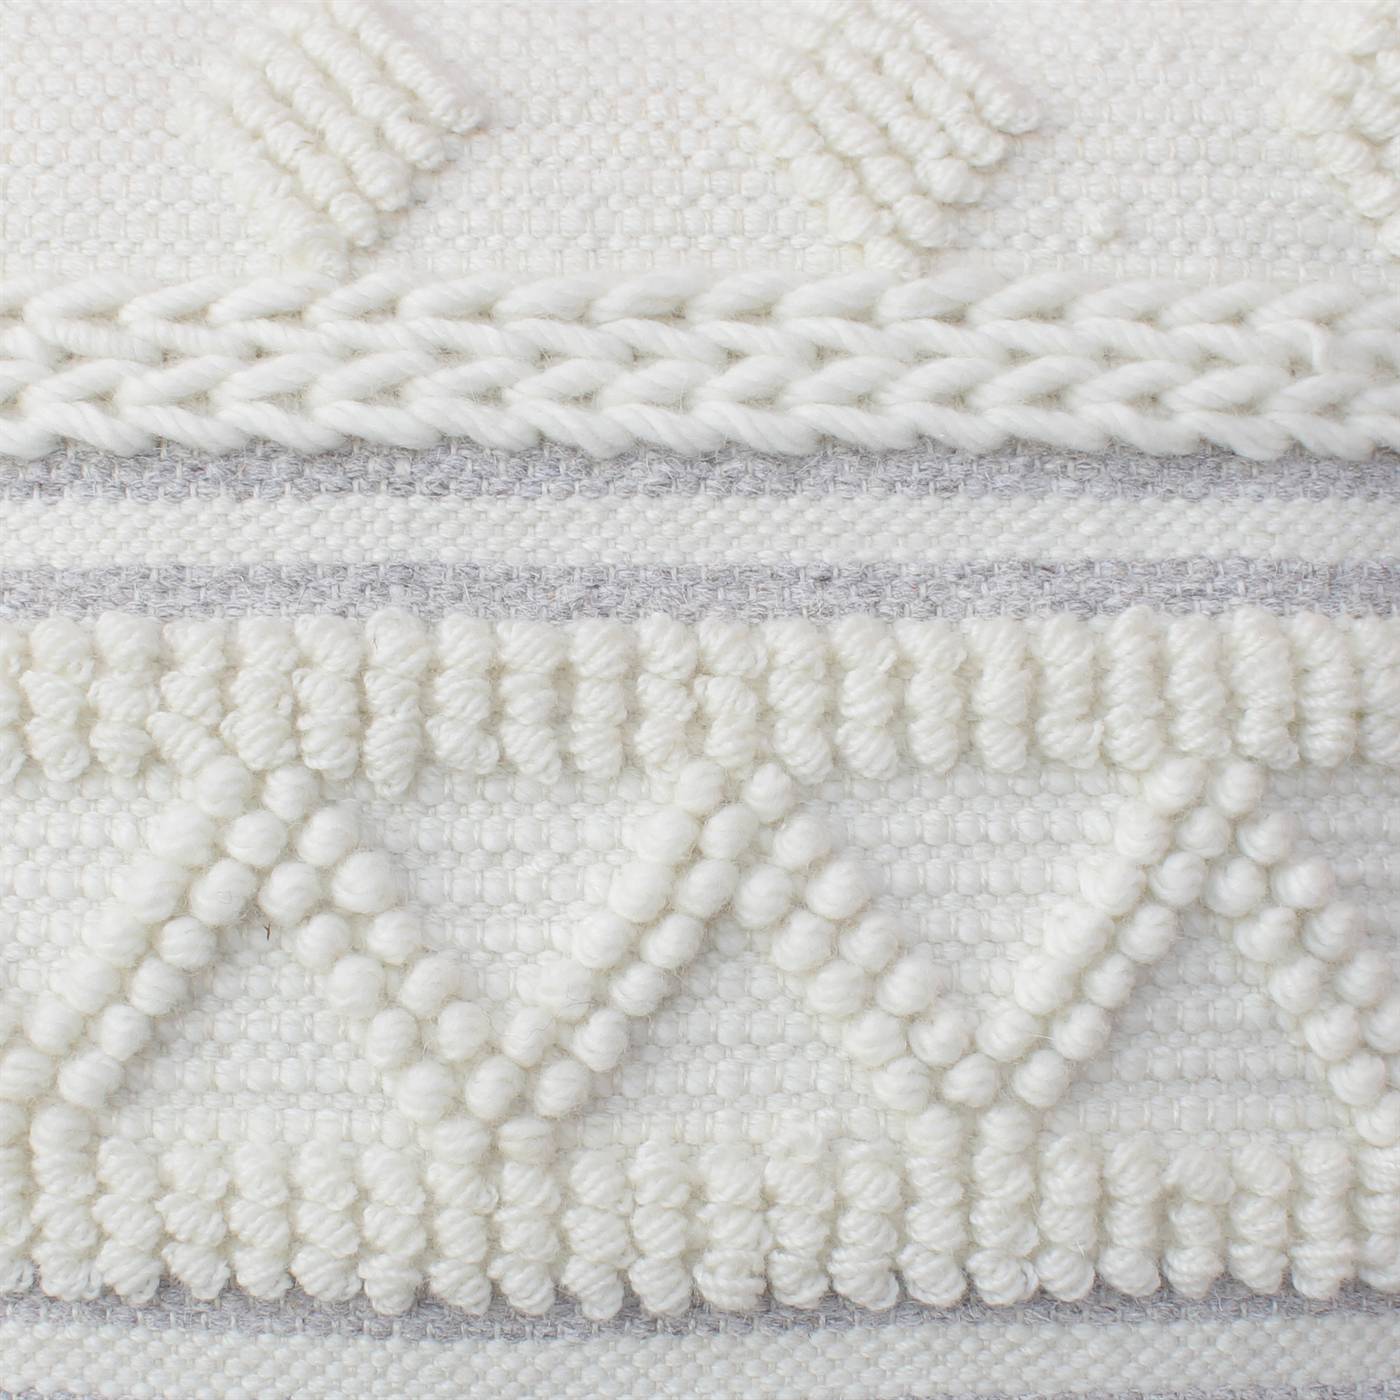 Morado Cushion, 45x45 cm, Natural White, NZ Wool, Hand Made, Pitloom, All Loop